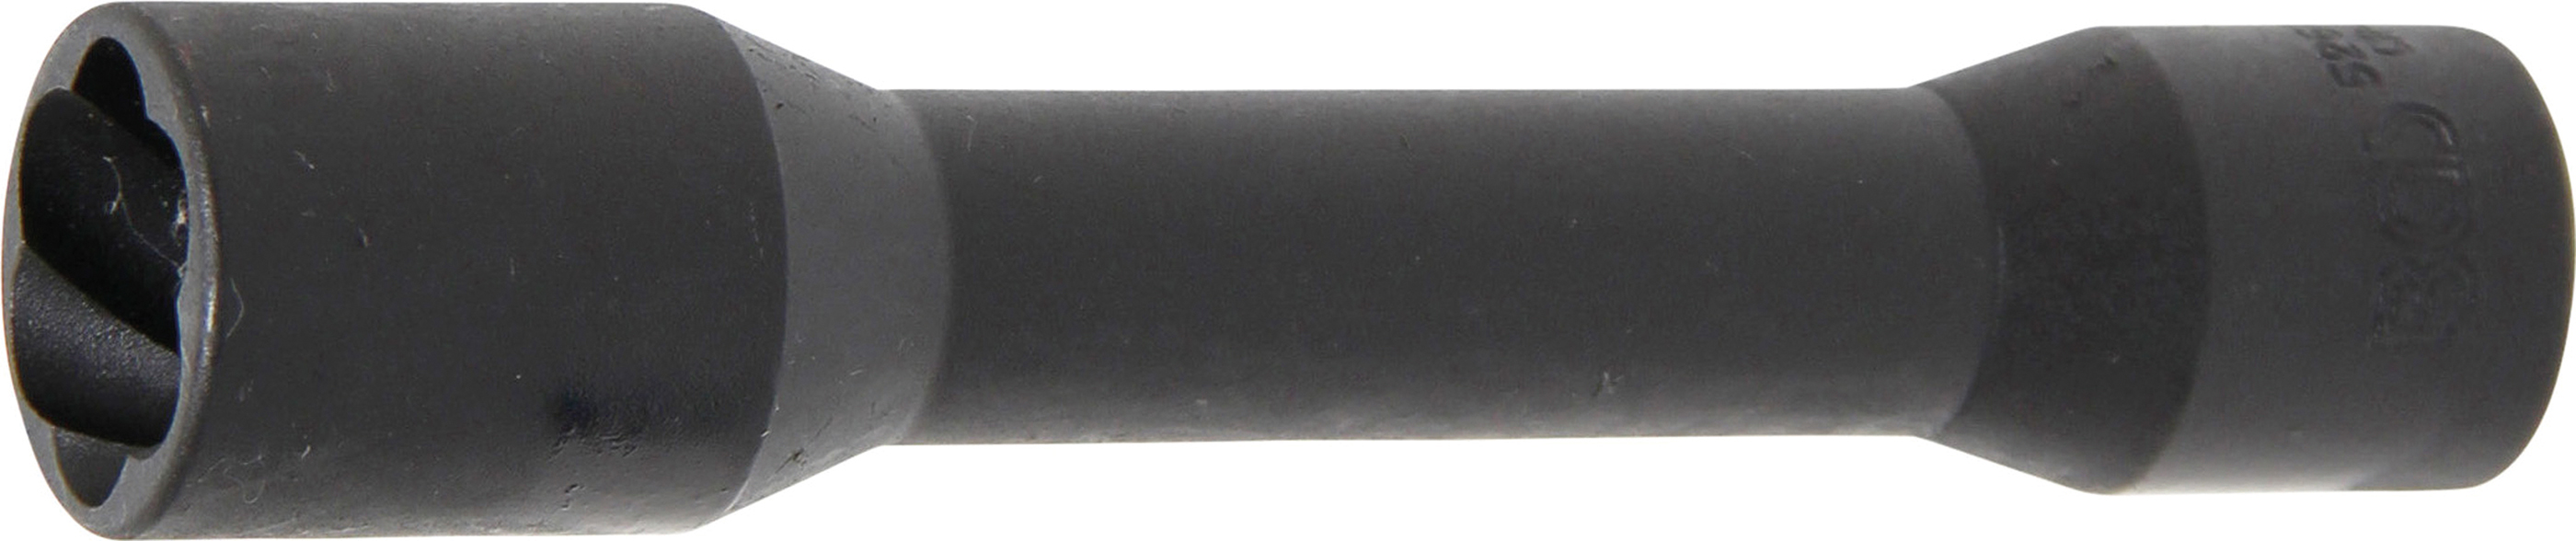 BGS 5264-21  Tubulara speciala adanca pentru suruburi deteriorate, 1/2", 21 mm